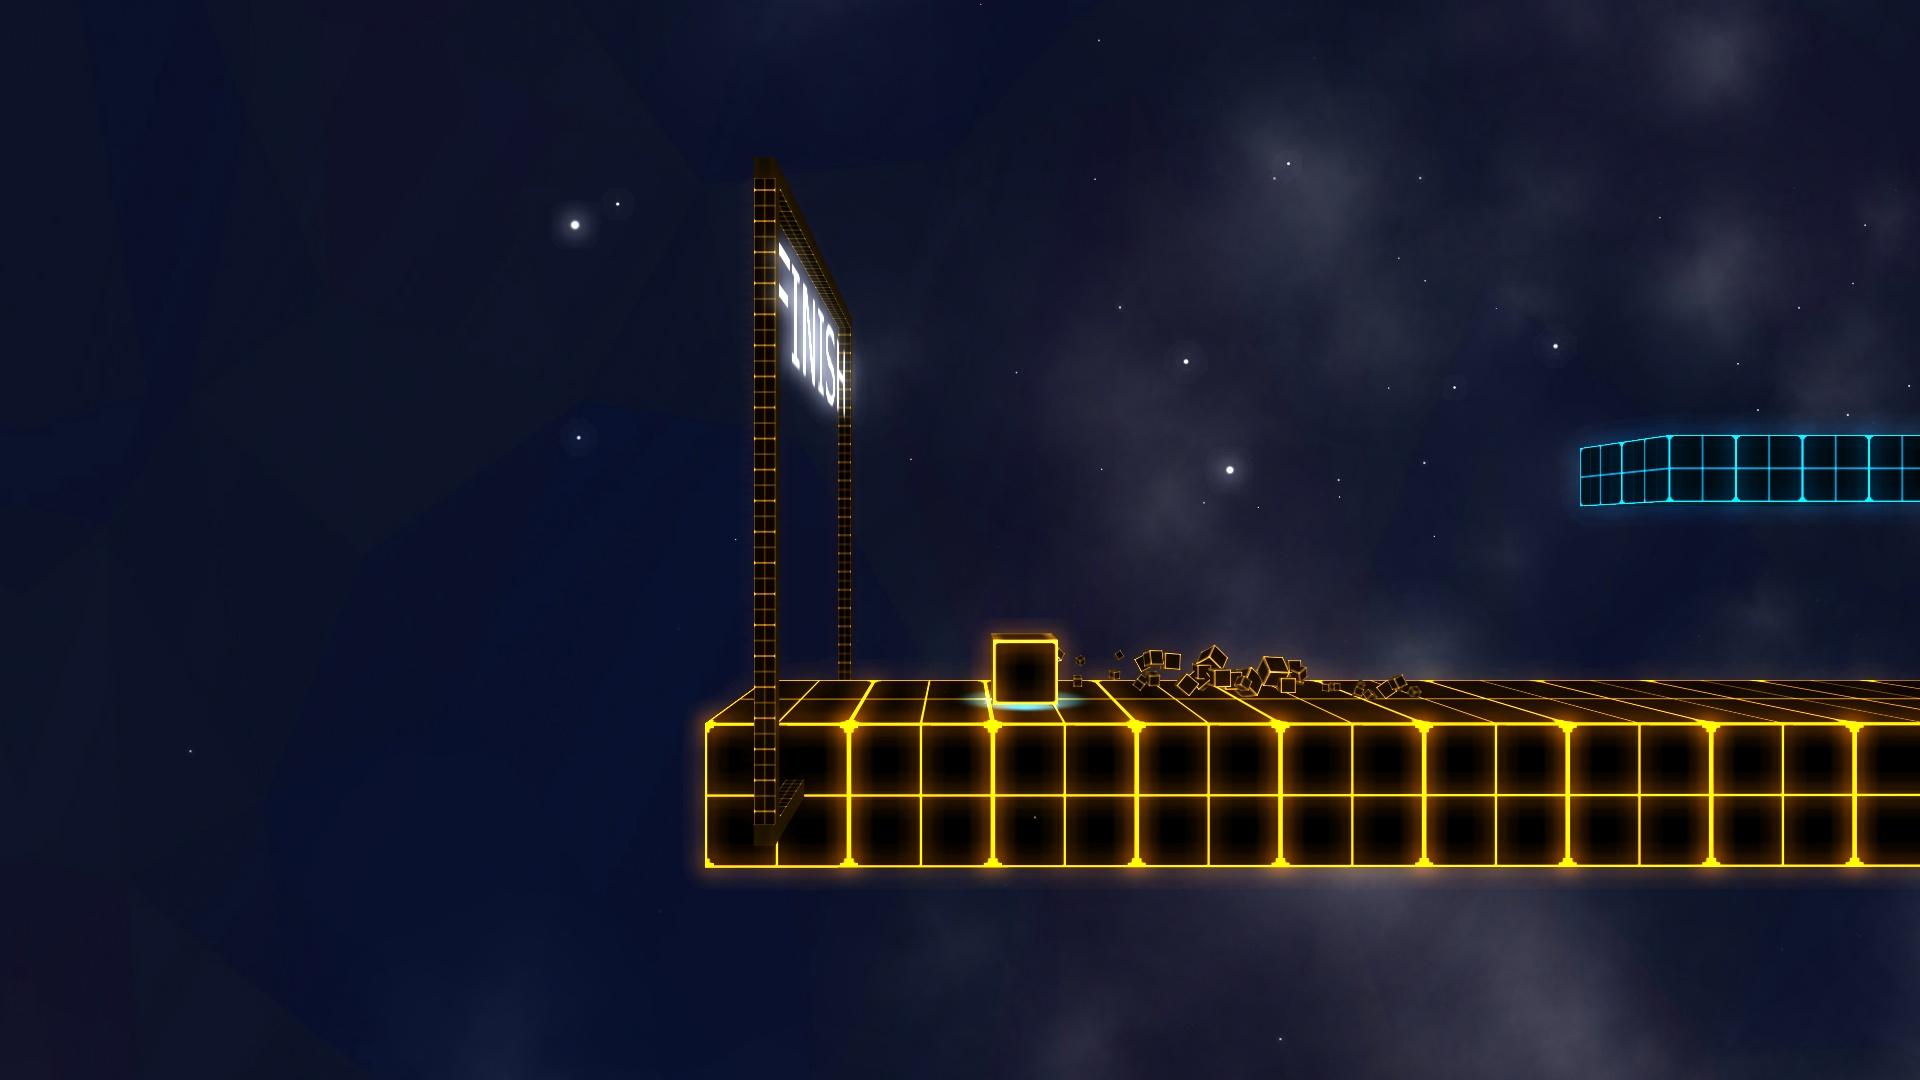 Screenshot №1 from game Cube Runner